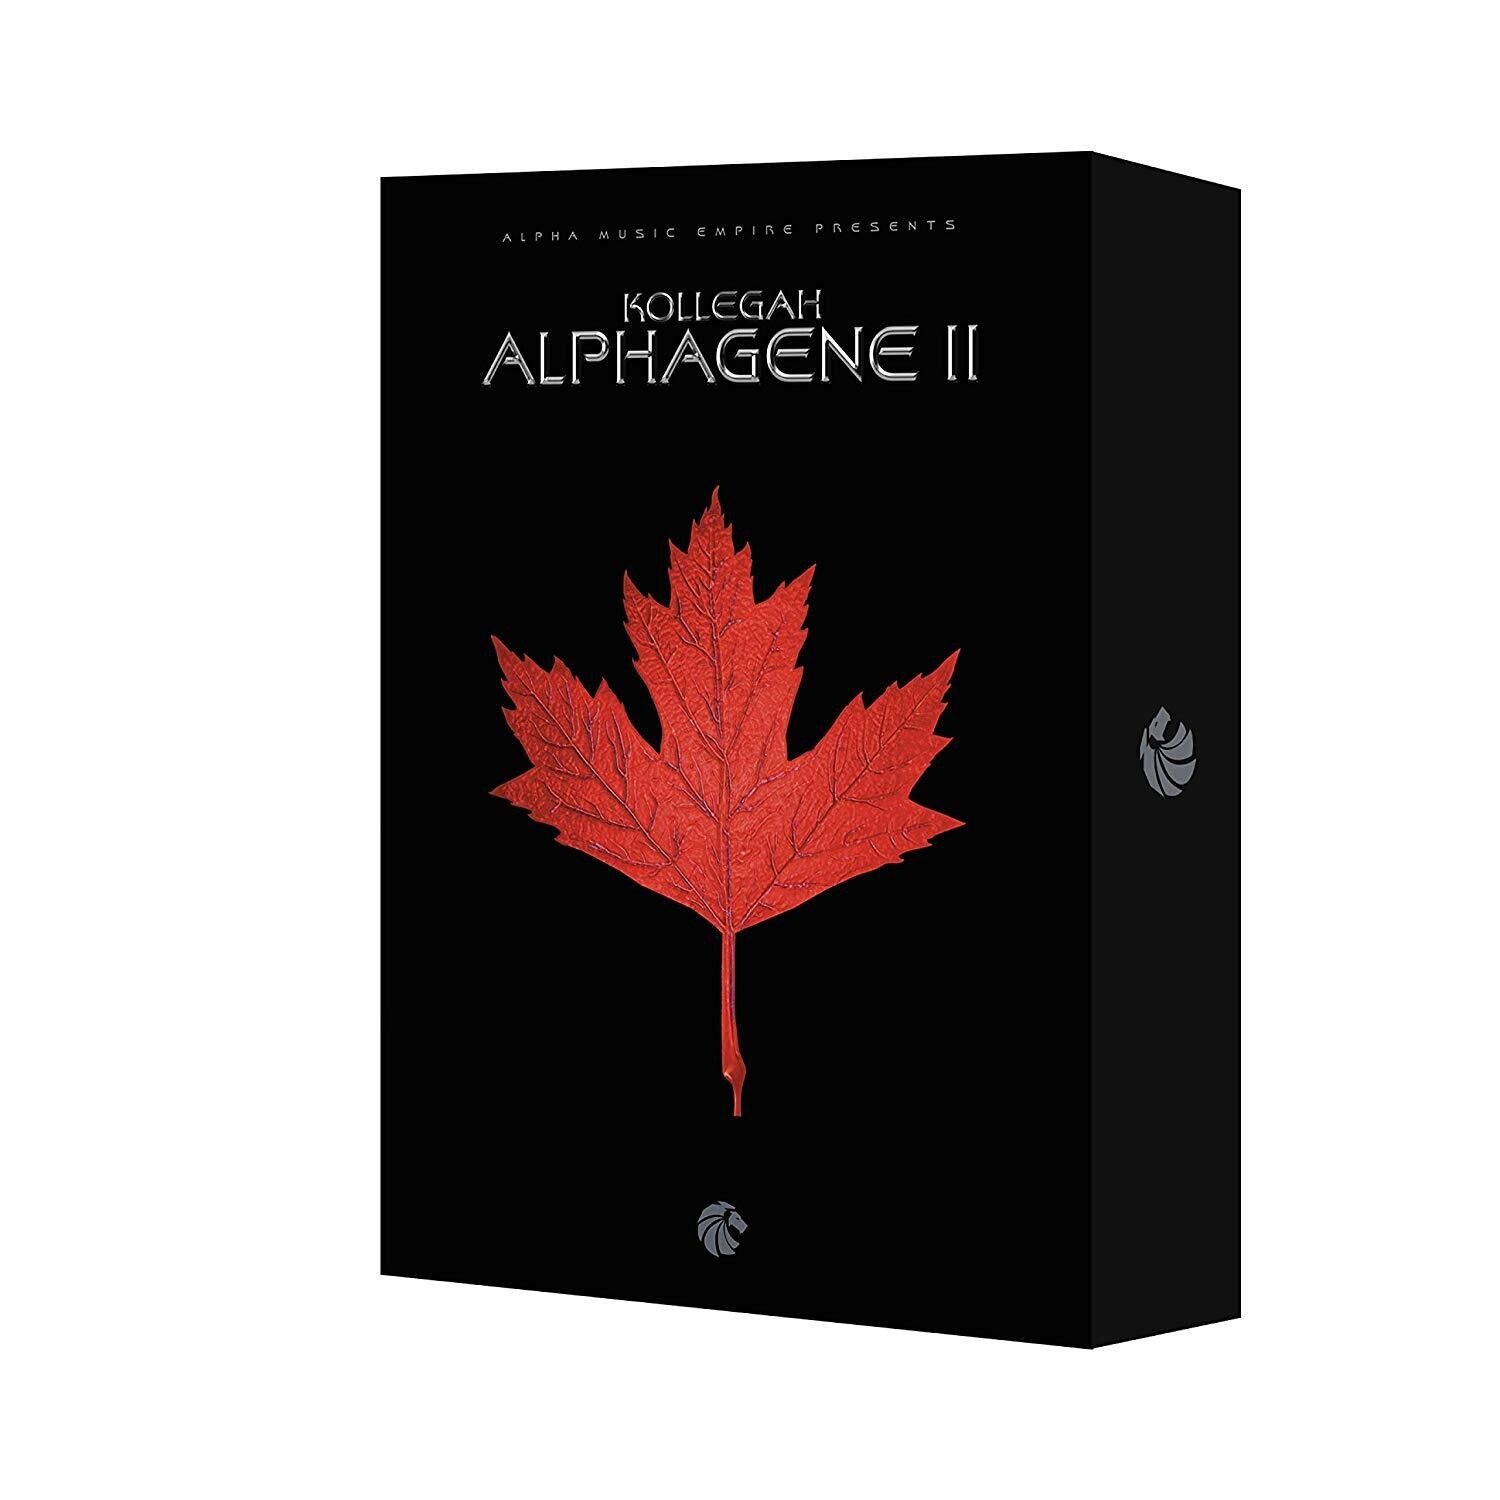 Kollegah - Alphagene 2 (Limited Premium Deluxe Box)(2019) 2CD